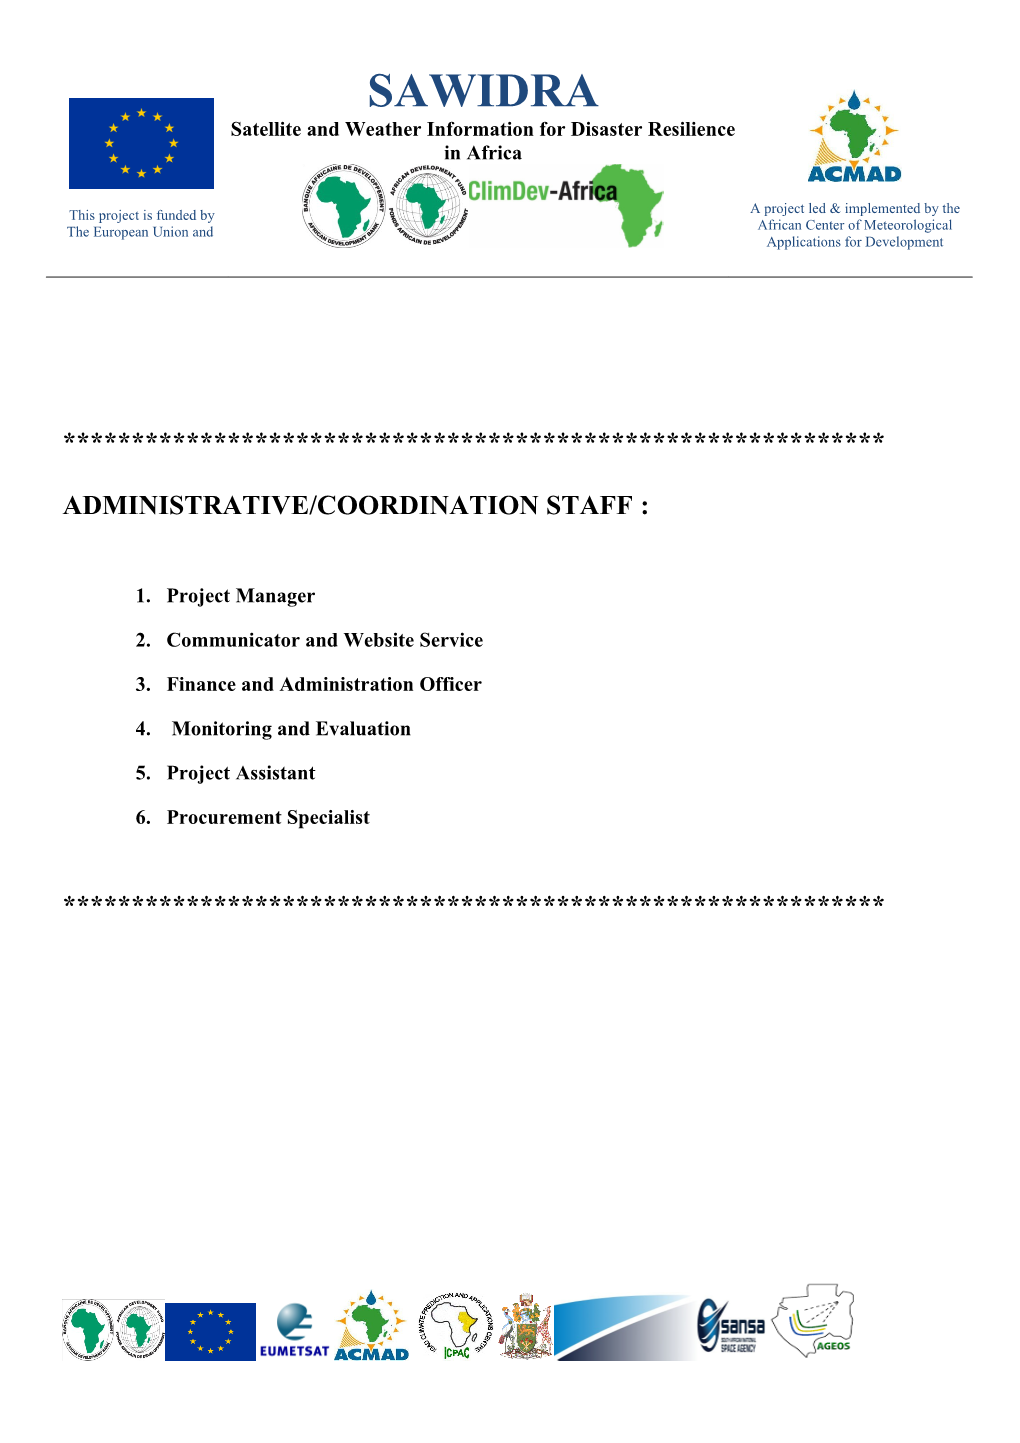 Administrative/Coordination Staff